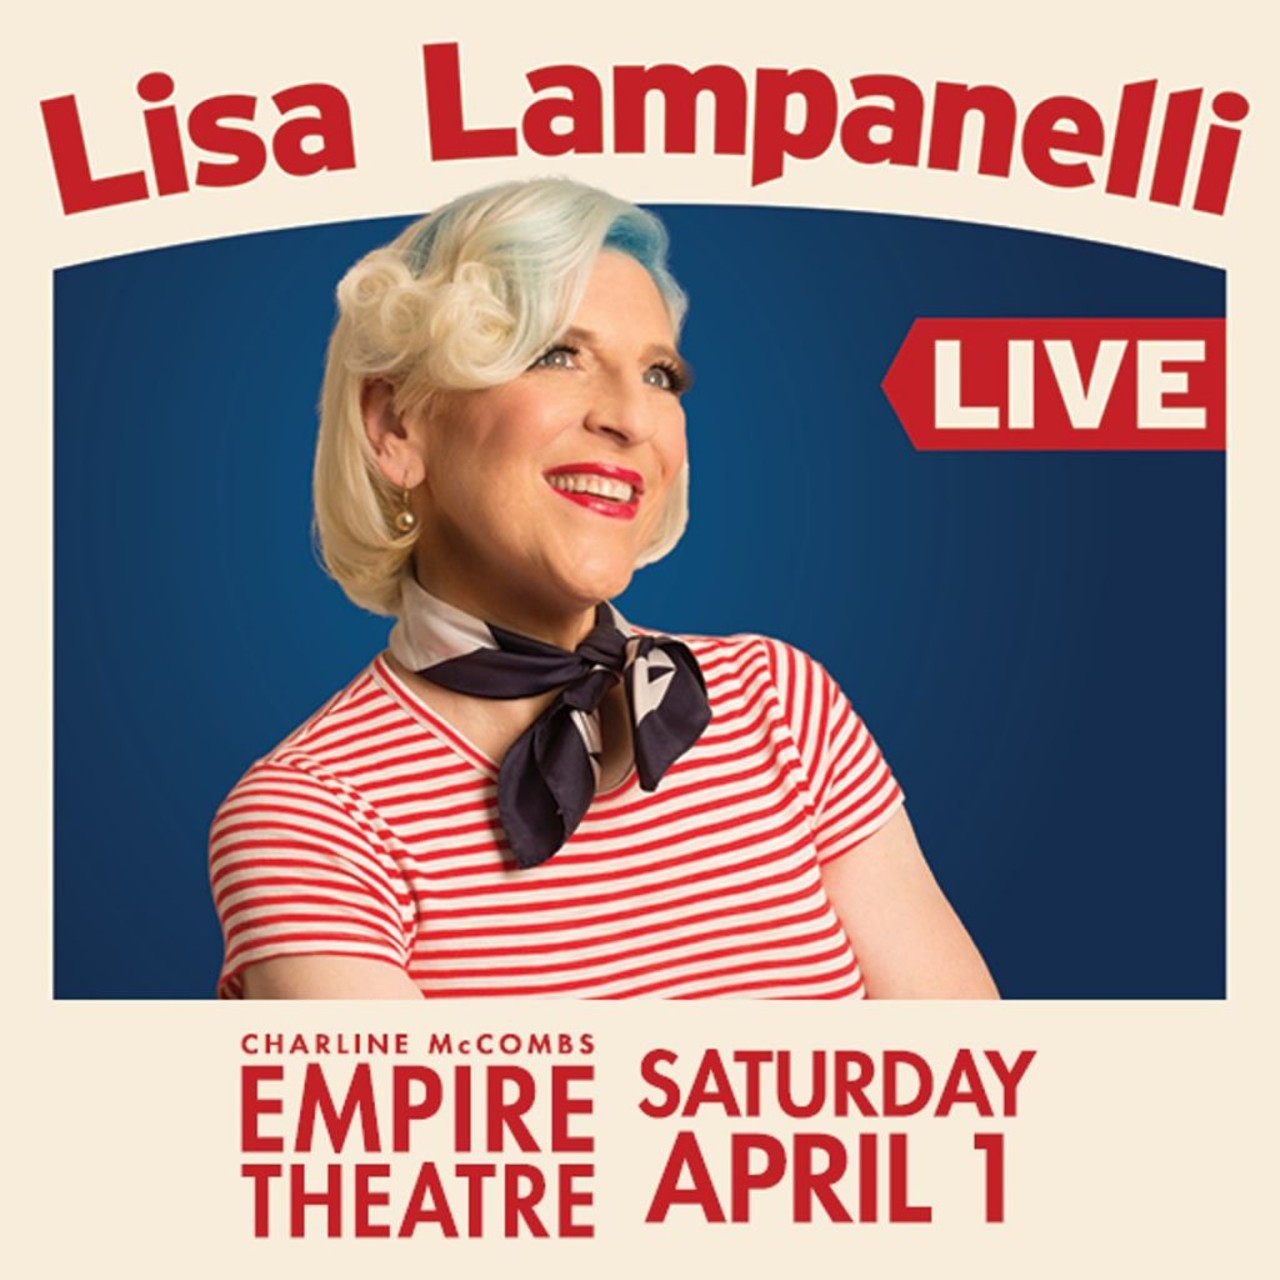 Lisa Lampanelli 
Sat., April 1, 8 p.m.  at the Charline McCombs Empire Theatre